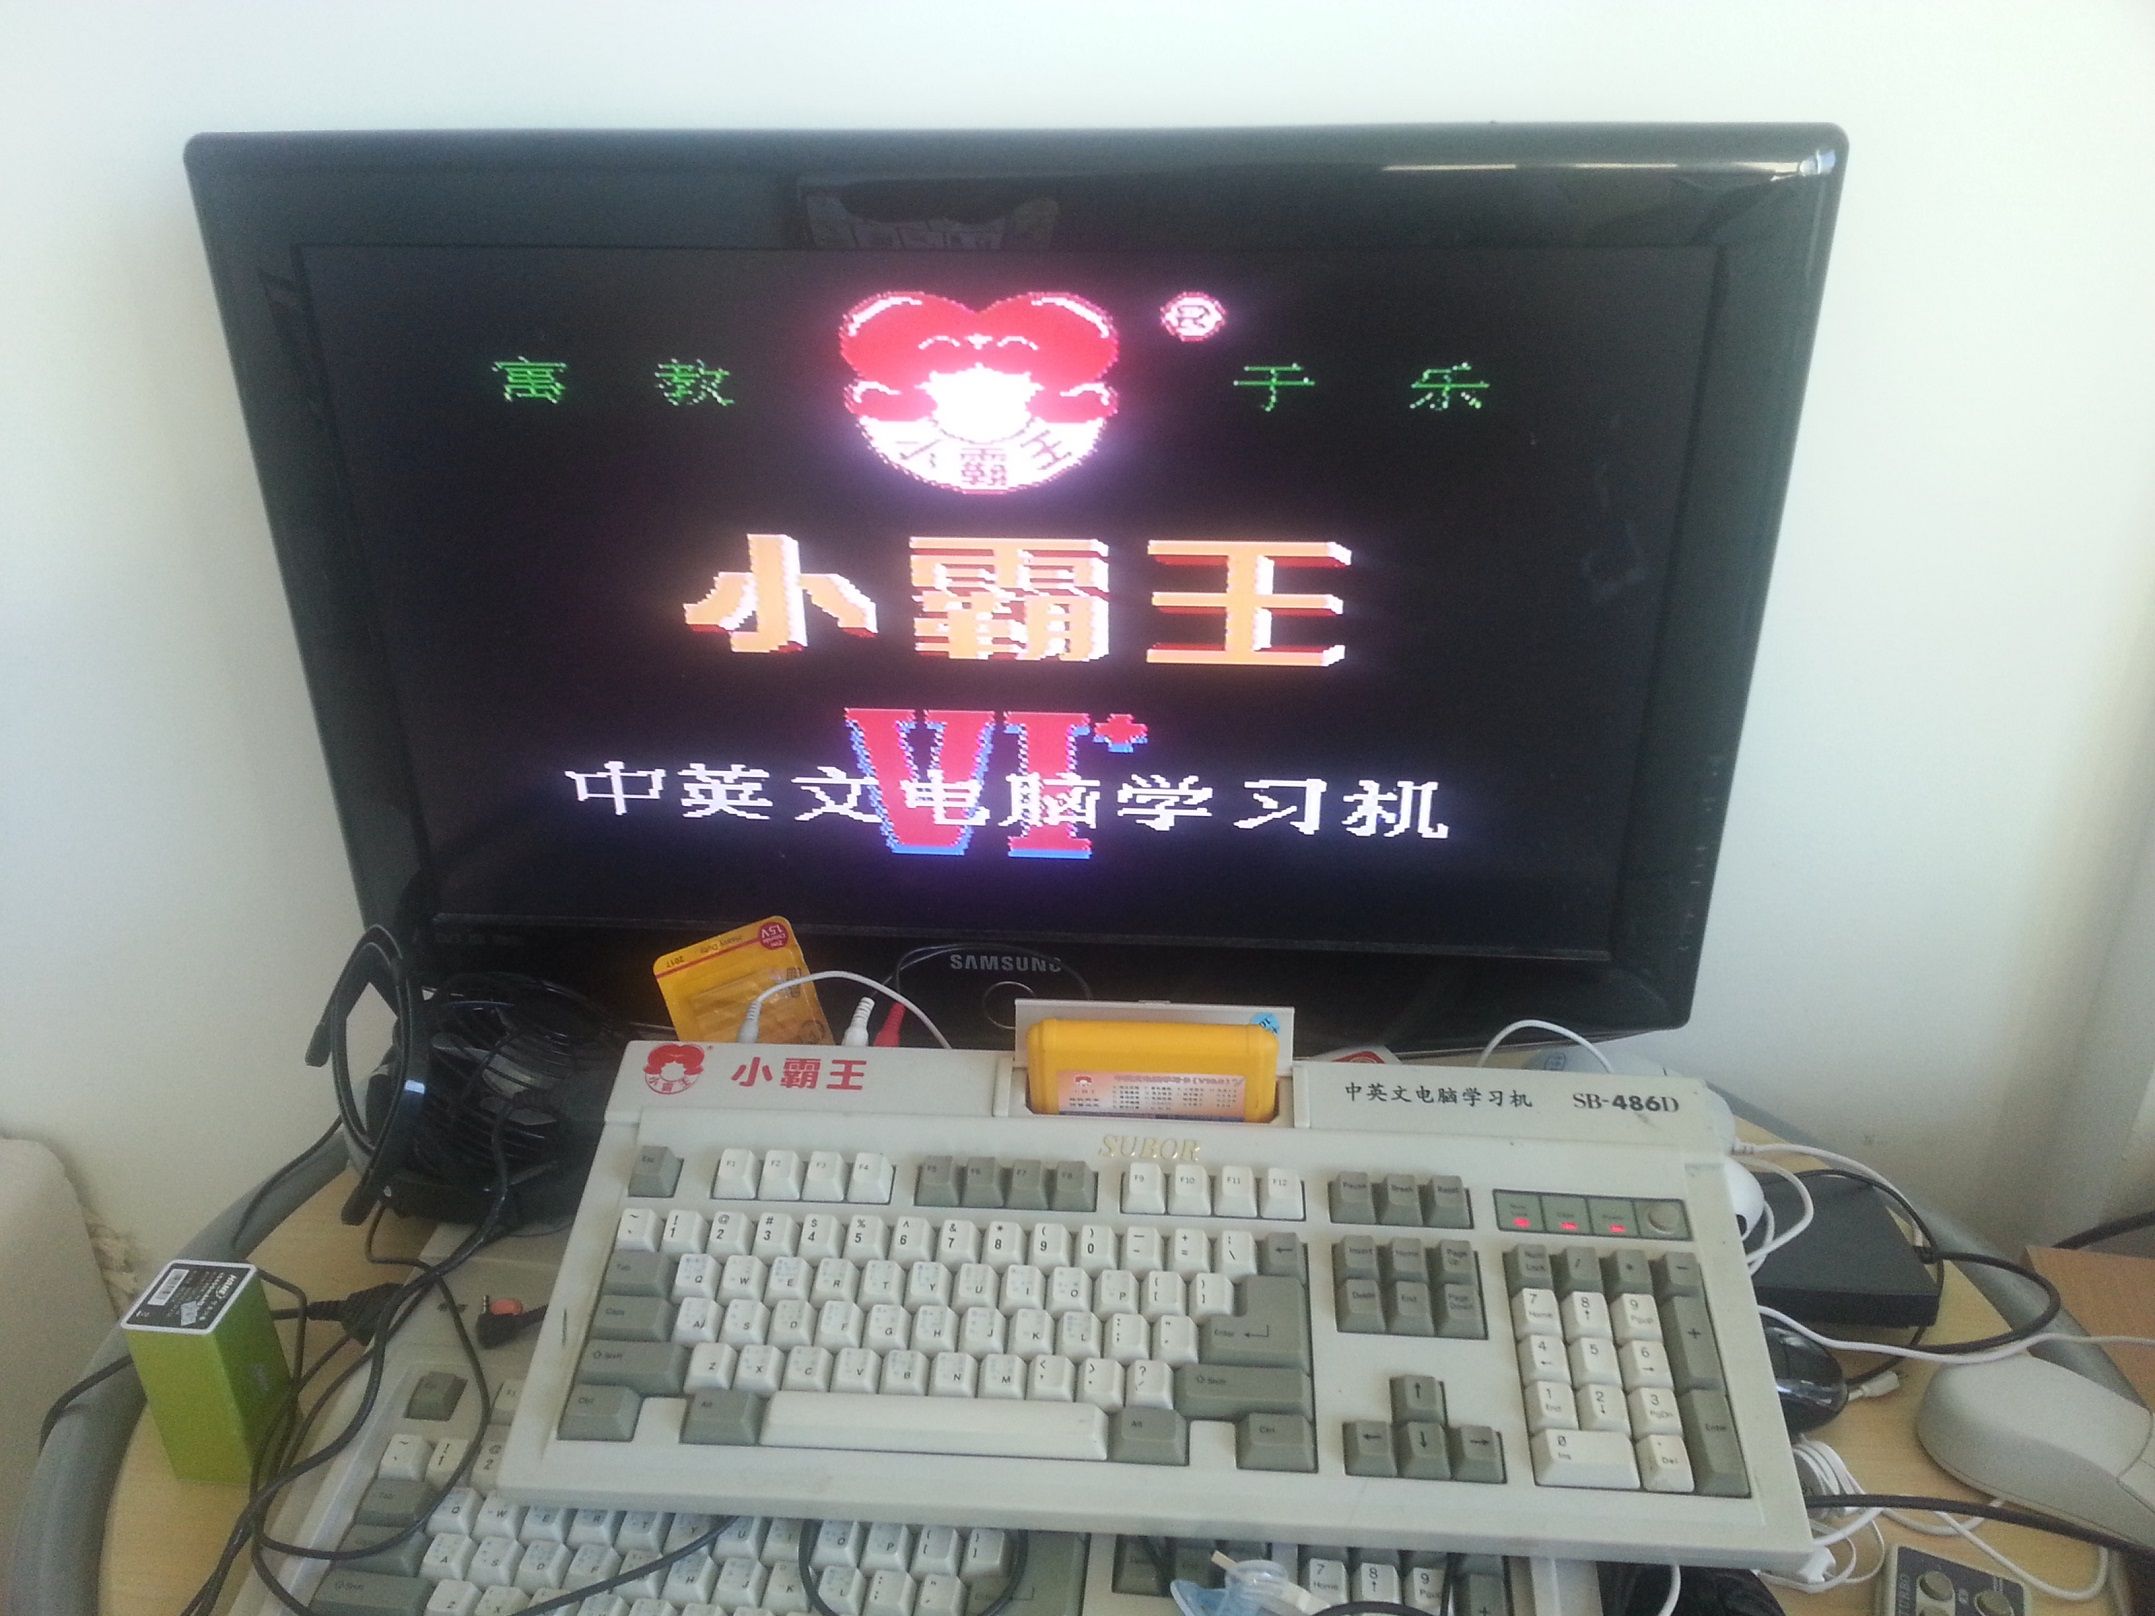 5c25634633d2864bfe6ed97b9ee23d51 The Childhood Memory - Subor Famicom Clone SB-486D (Xiao Ba Wang) 8 bit Nintendo Entertainment System Subor 